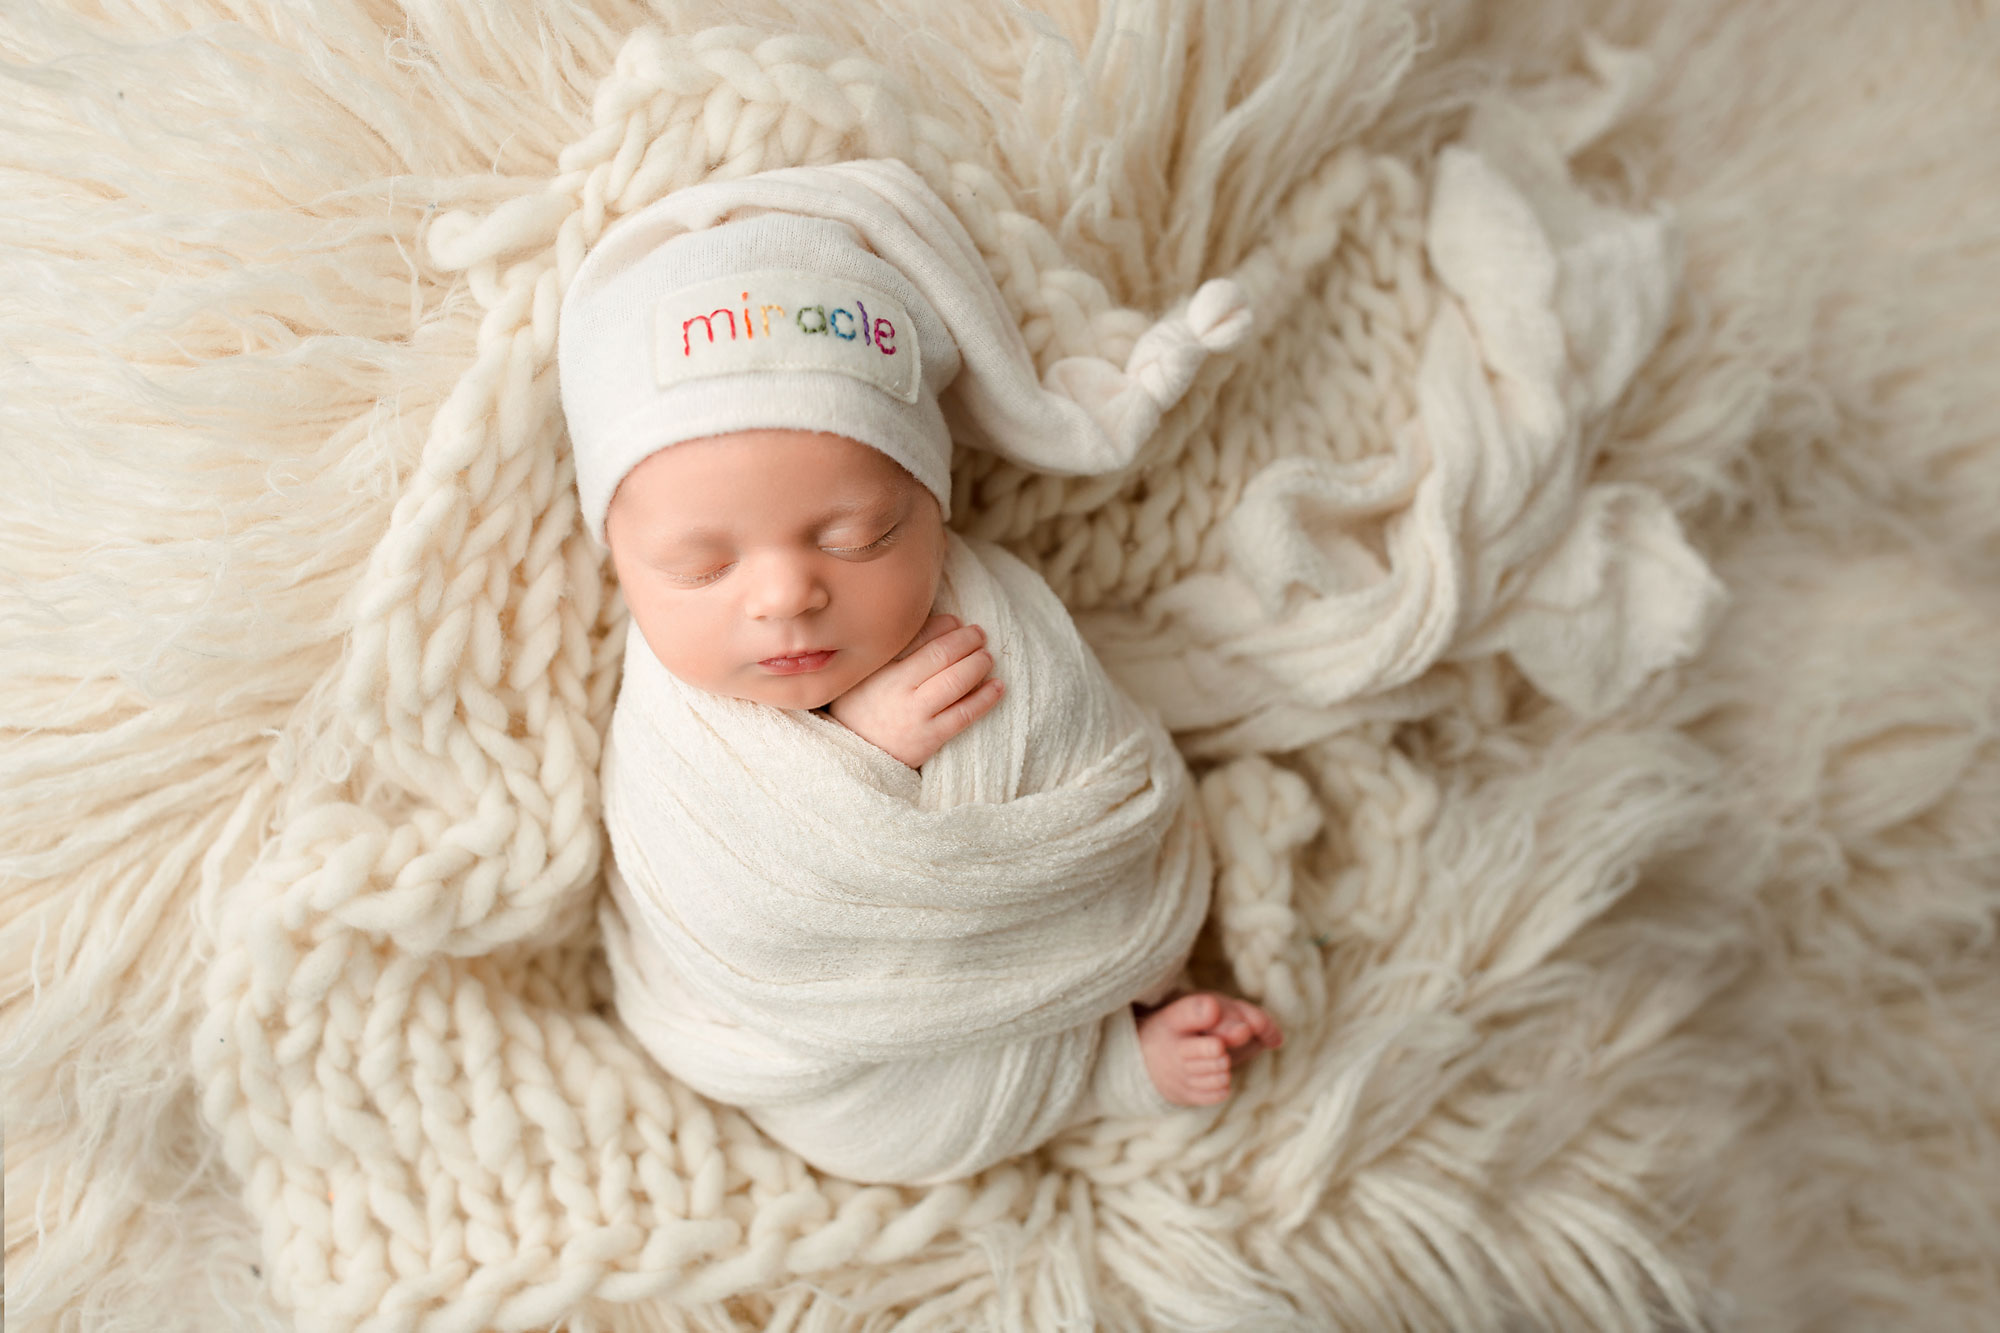 nj newborn photos showing a baby boy 